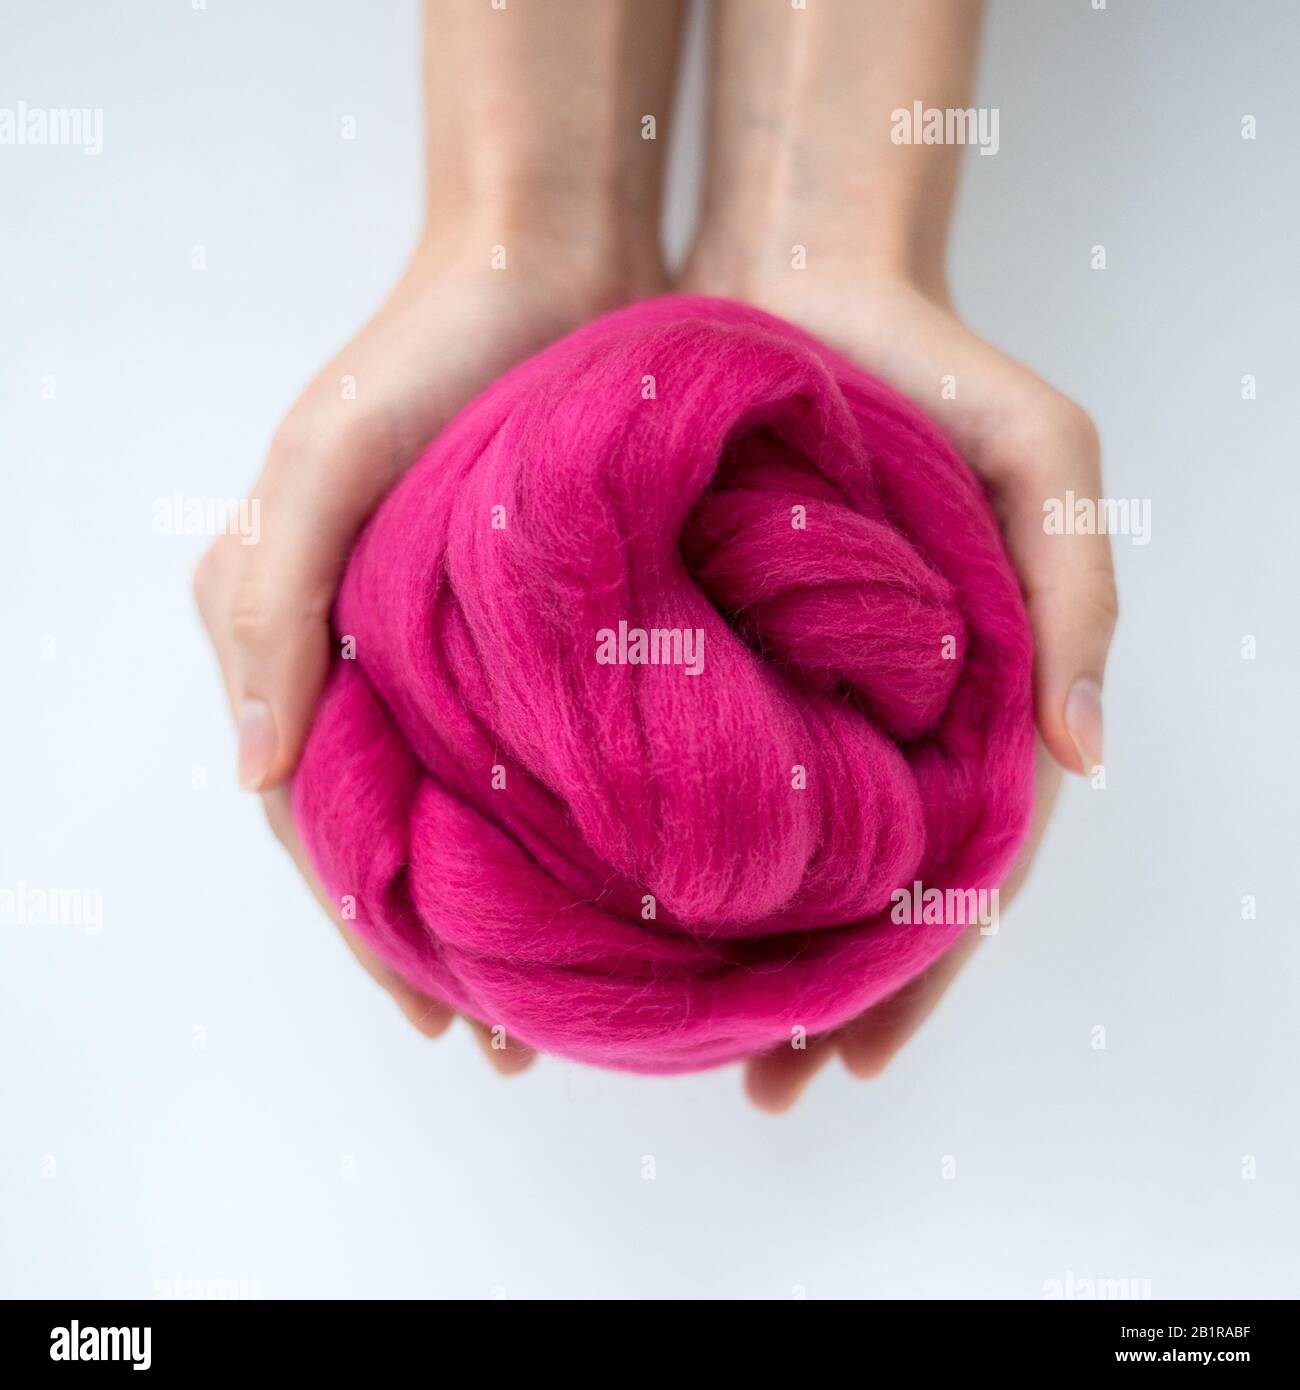 Cotton Wool Balls On Pink Background Stock Photo 509520370